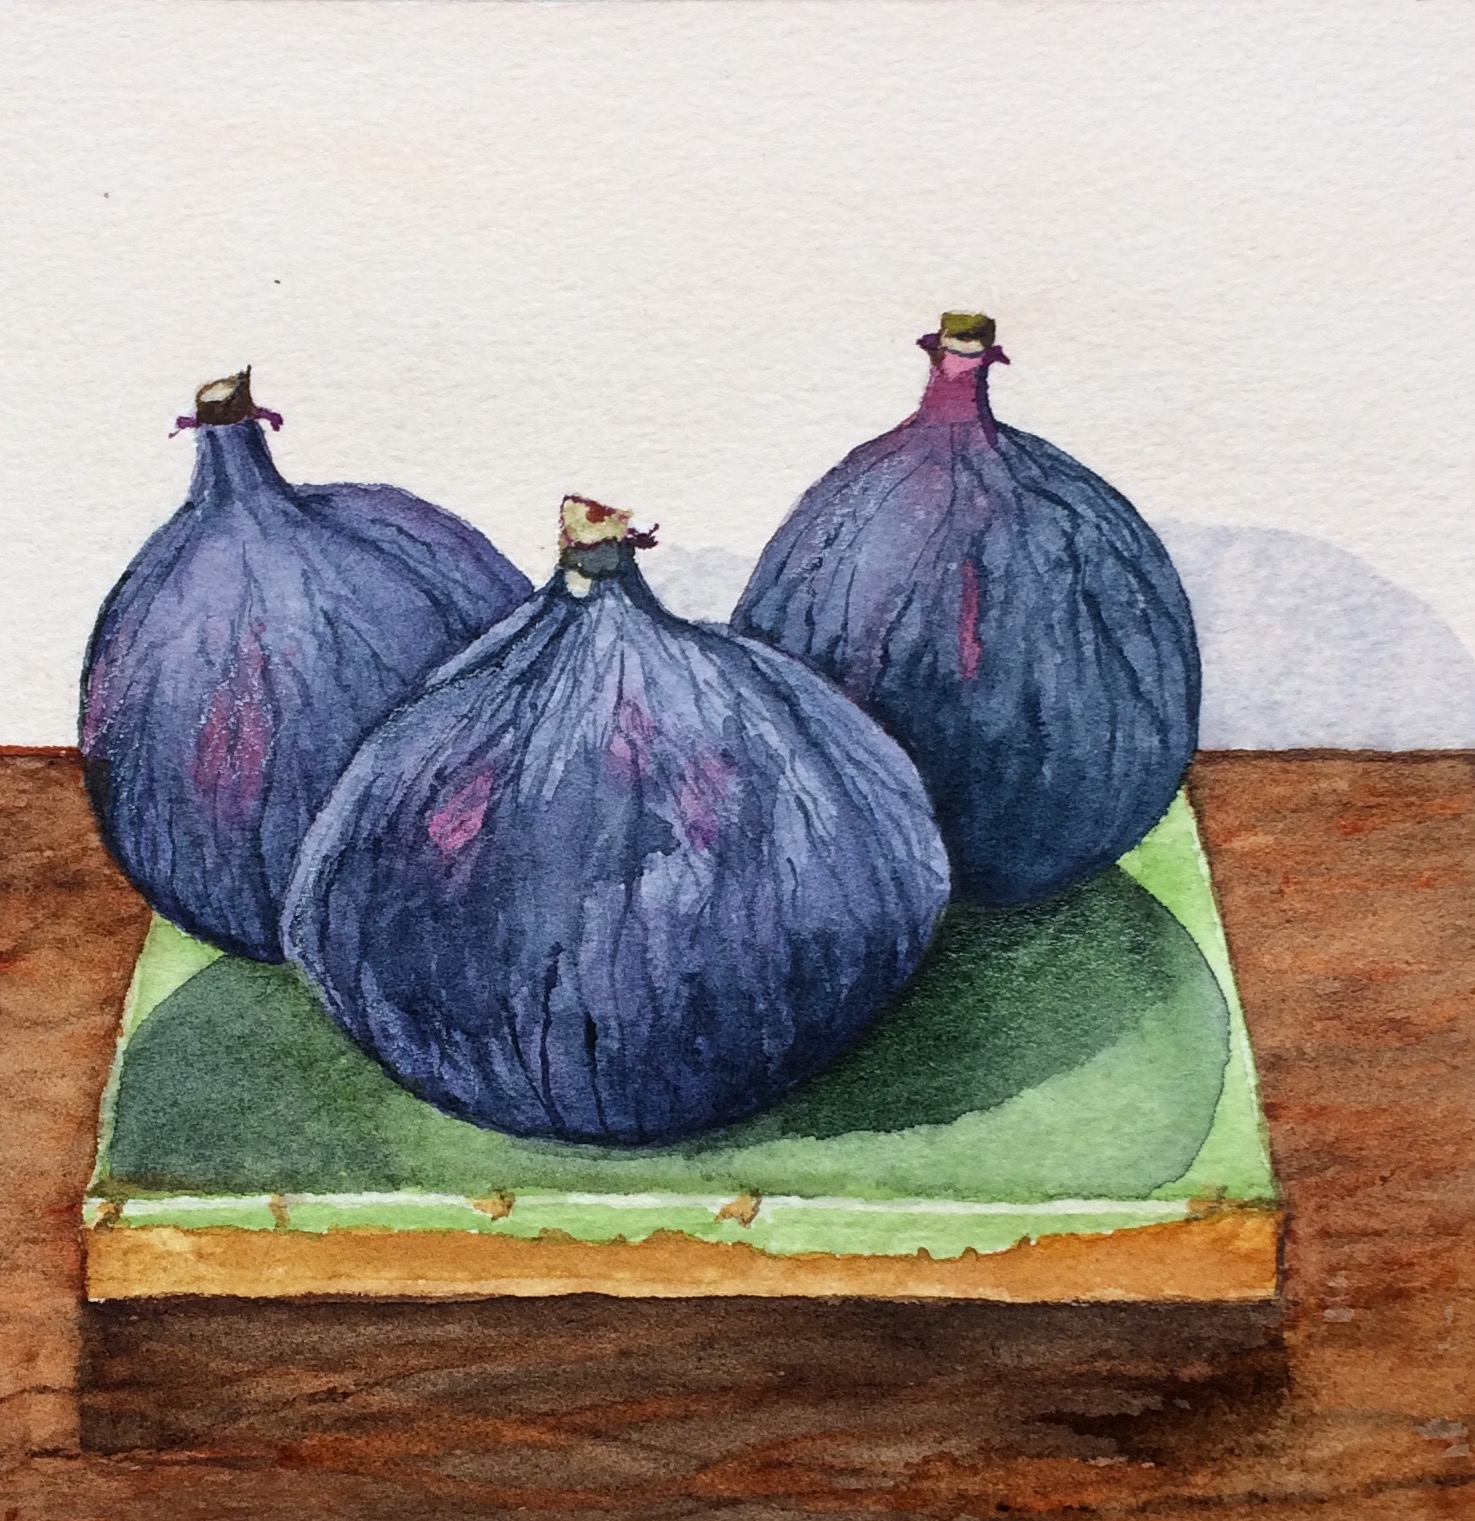 Turkish figs - sold